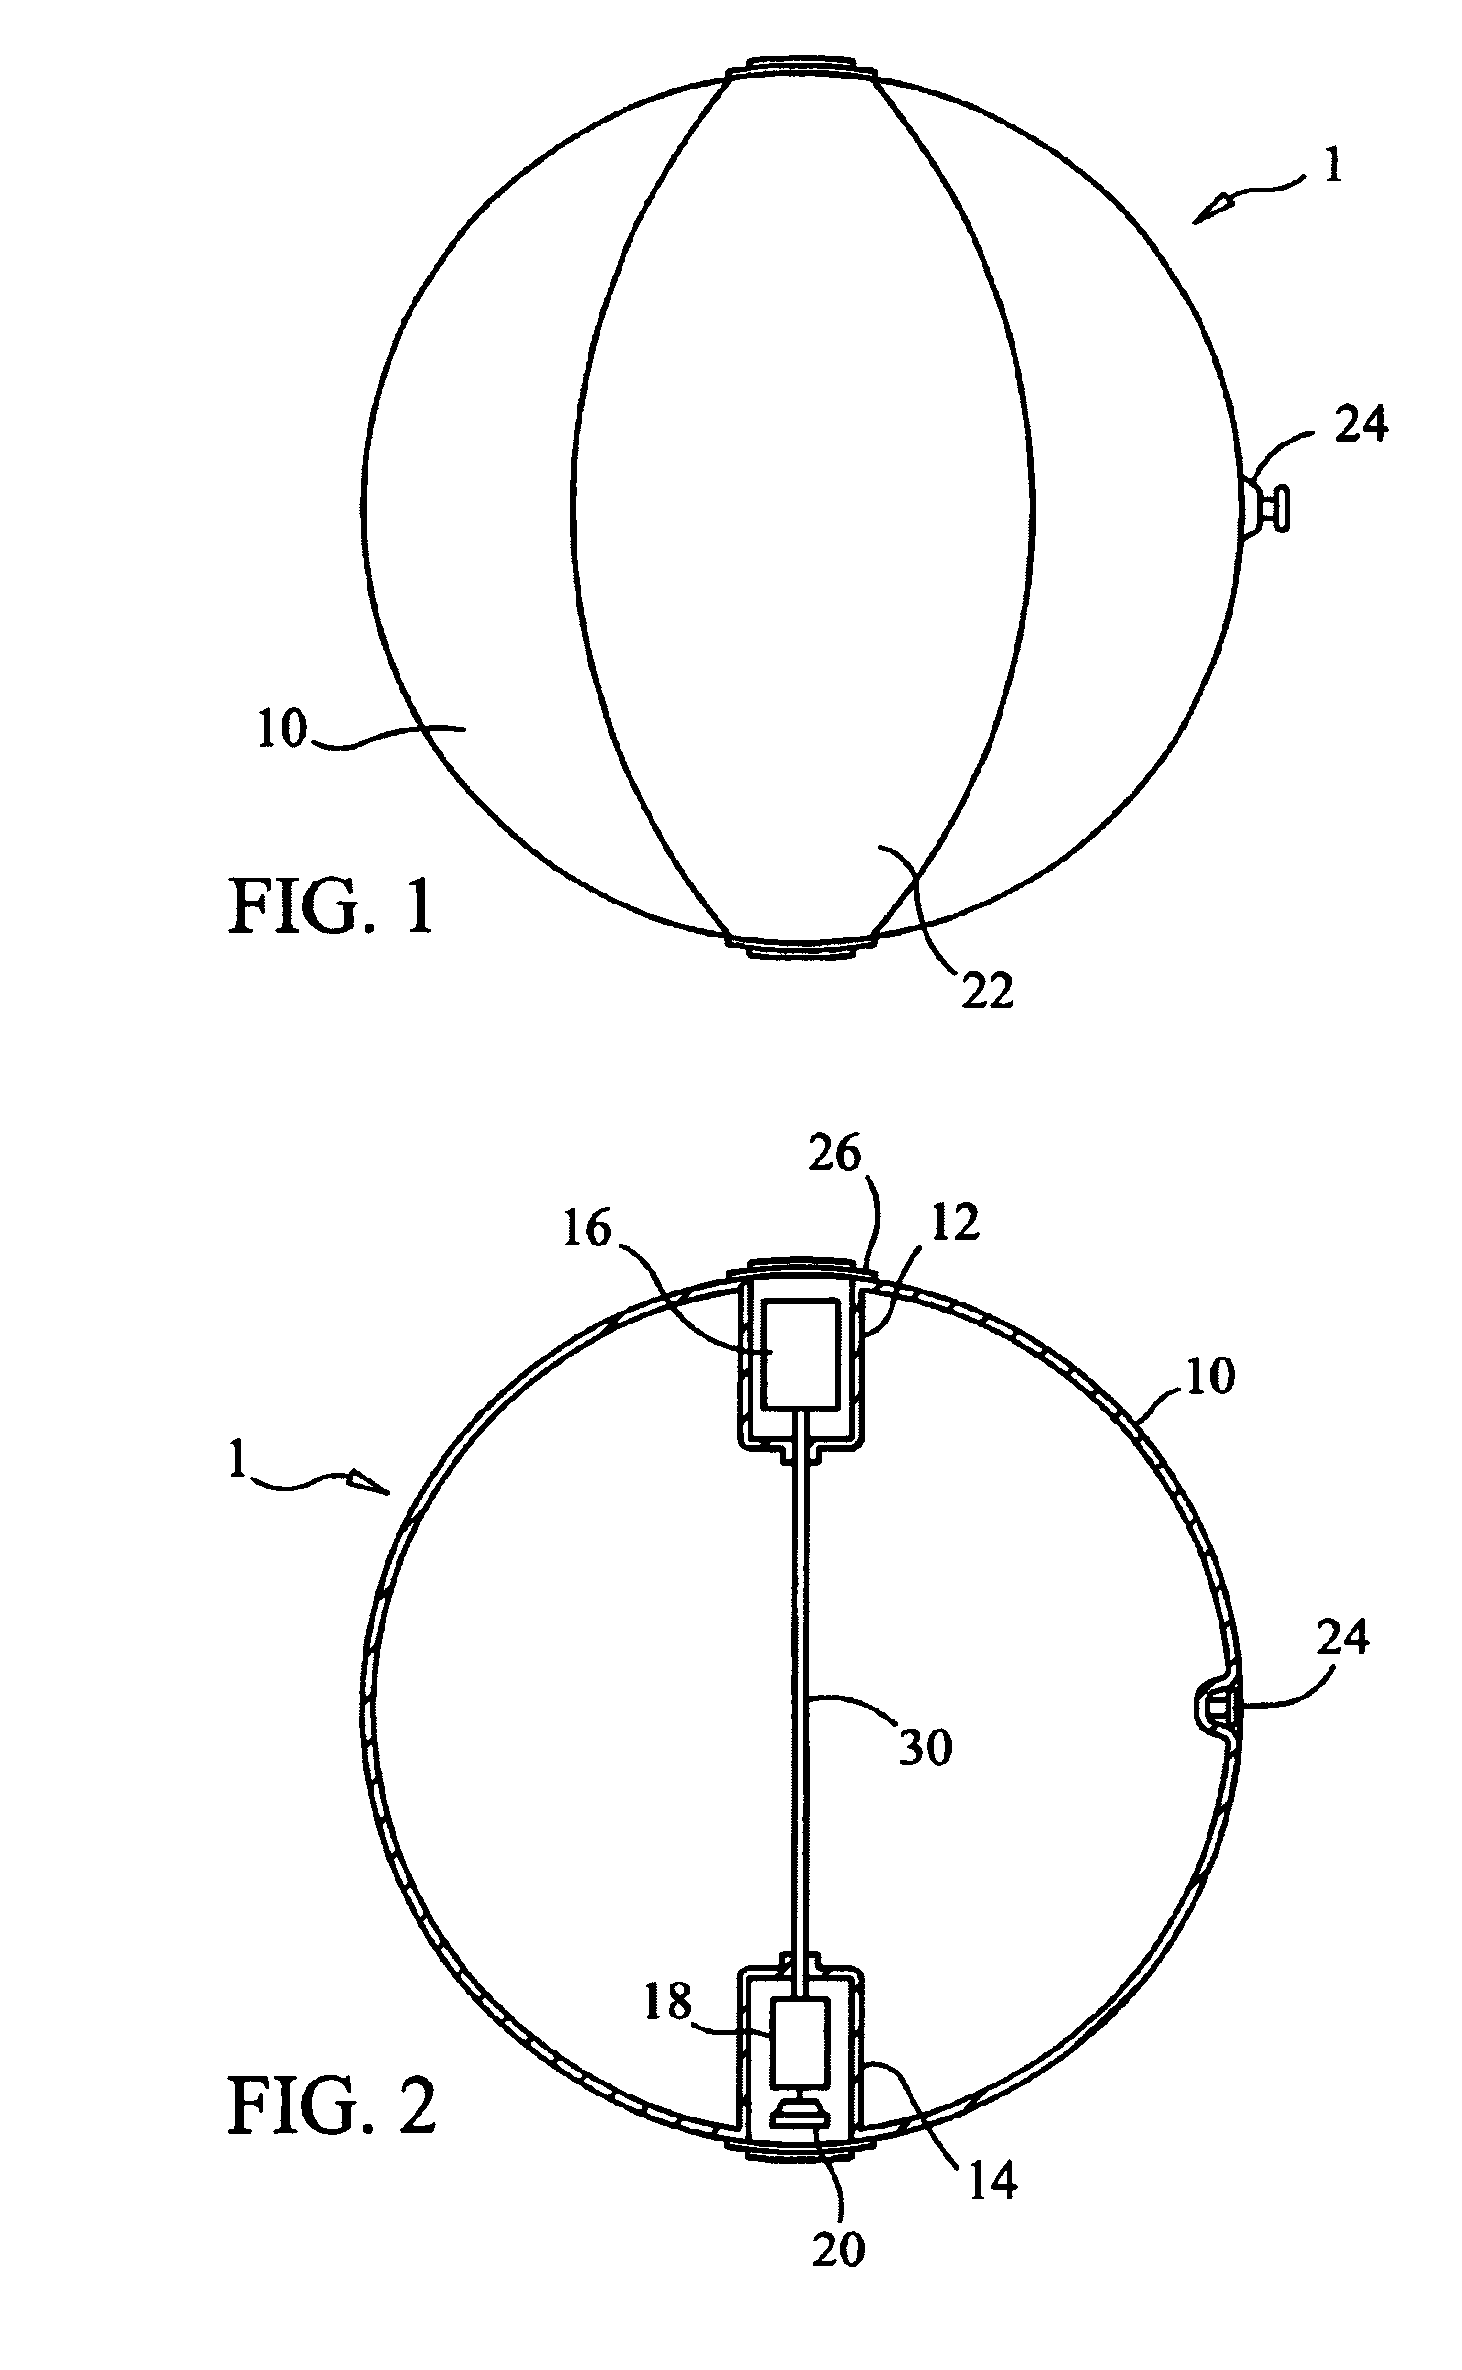 Sound and light emitting inflatable ball